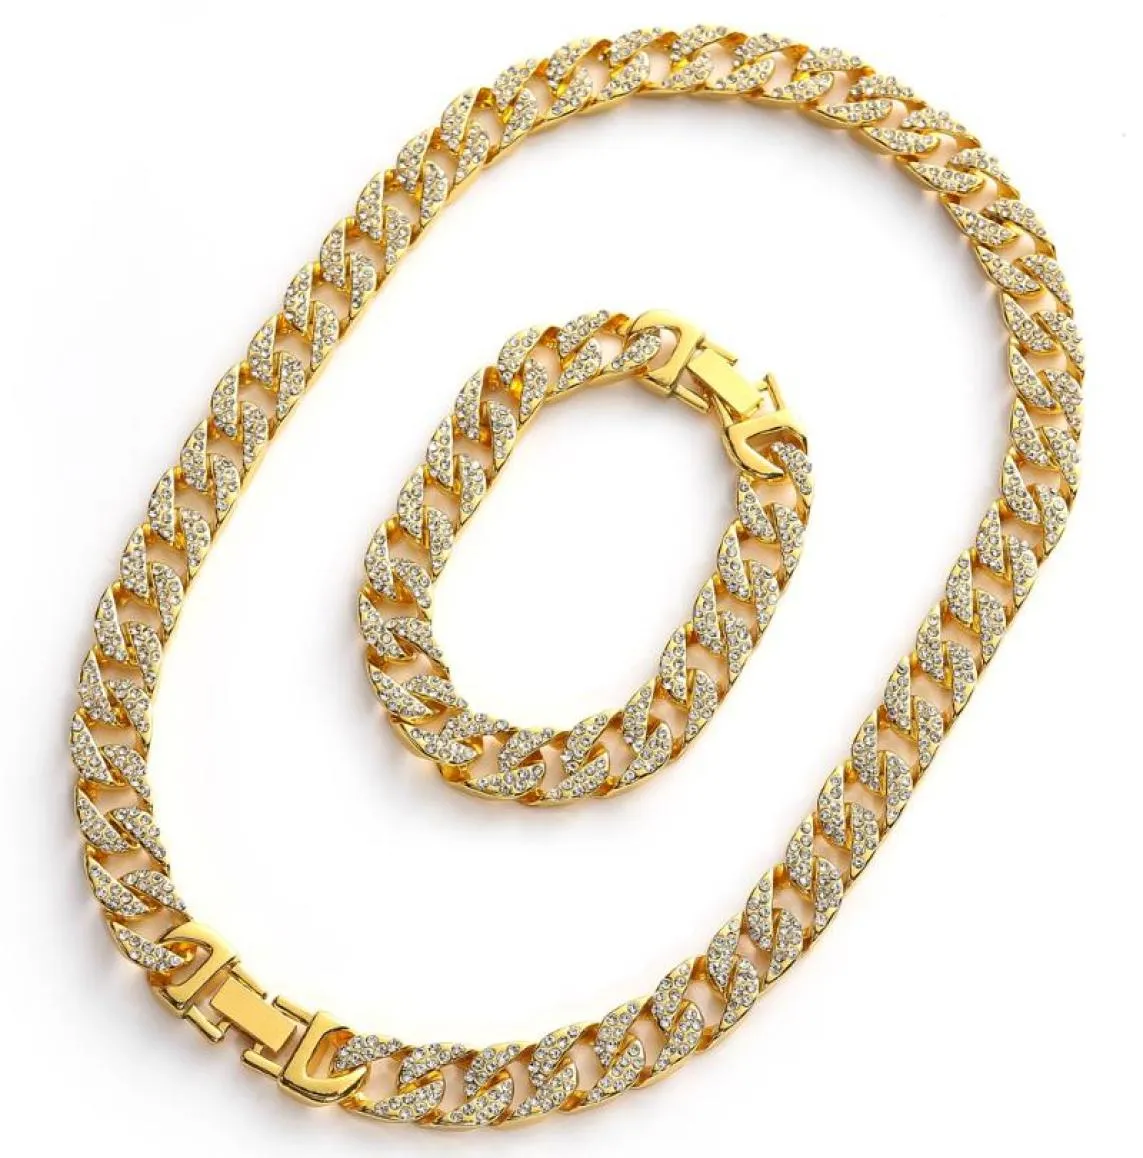 Brincos Colar Hip Hop Men colares de cor de ouro amp Braclete Combo Sett Out Cingan Jewerly Crystal Miami Chain For2217012